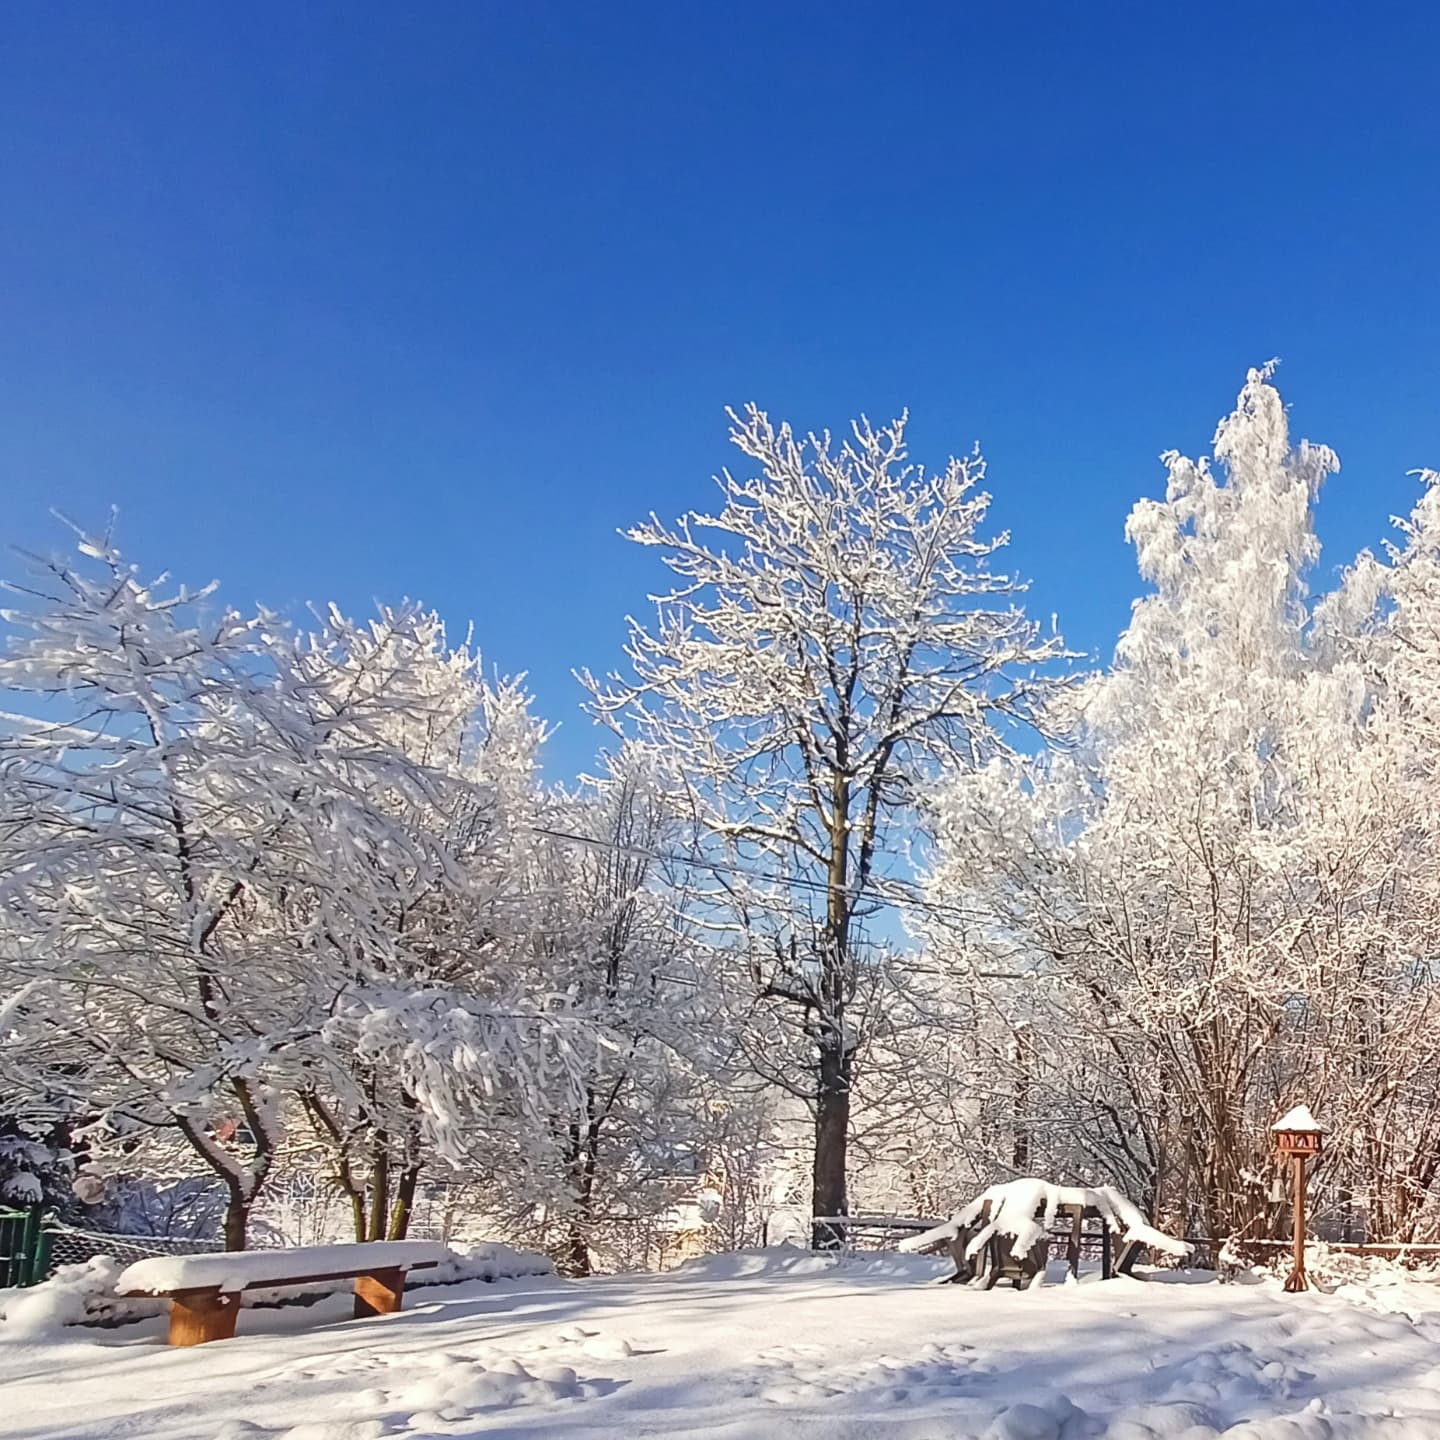 Winter Wonderland 馃槏鉂勶笍馃彅锔�
#tatrasquare #domekzakopane